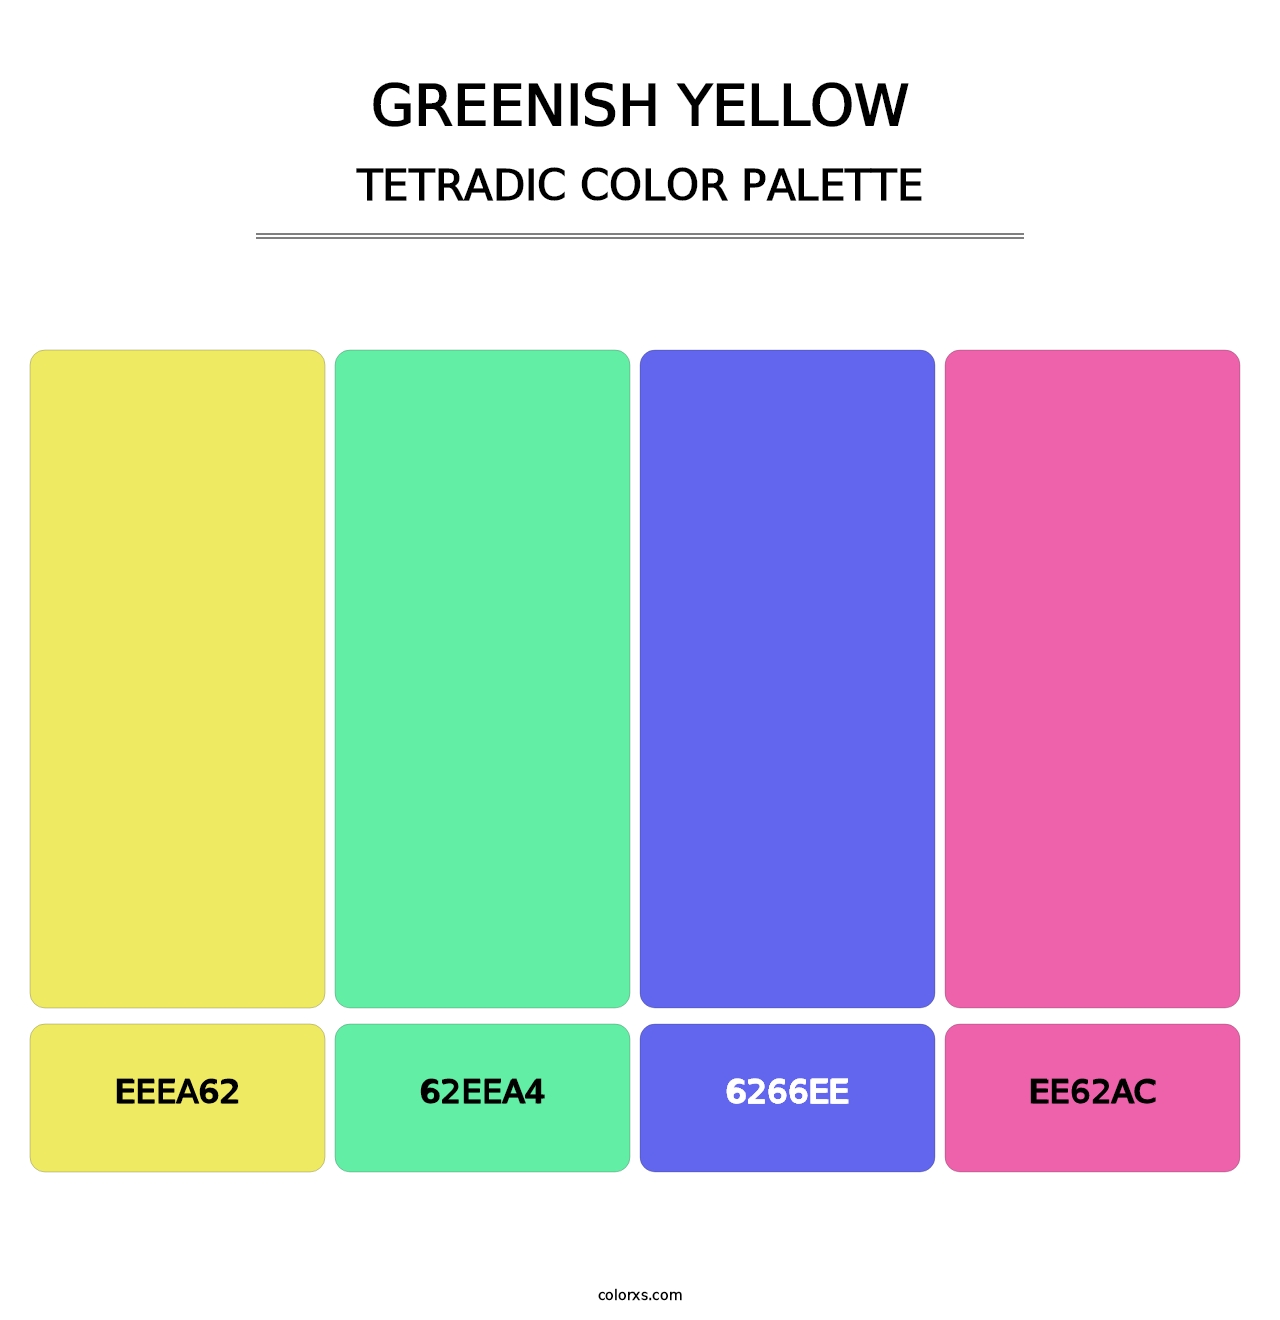 Greenish Yellow - Tetradic Color Palette